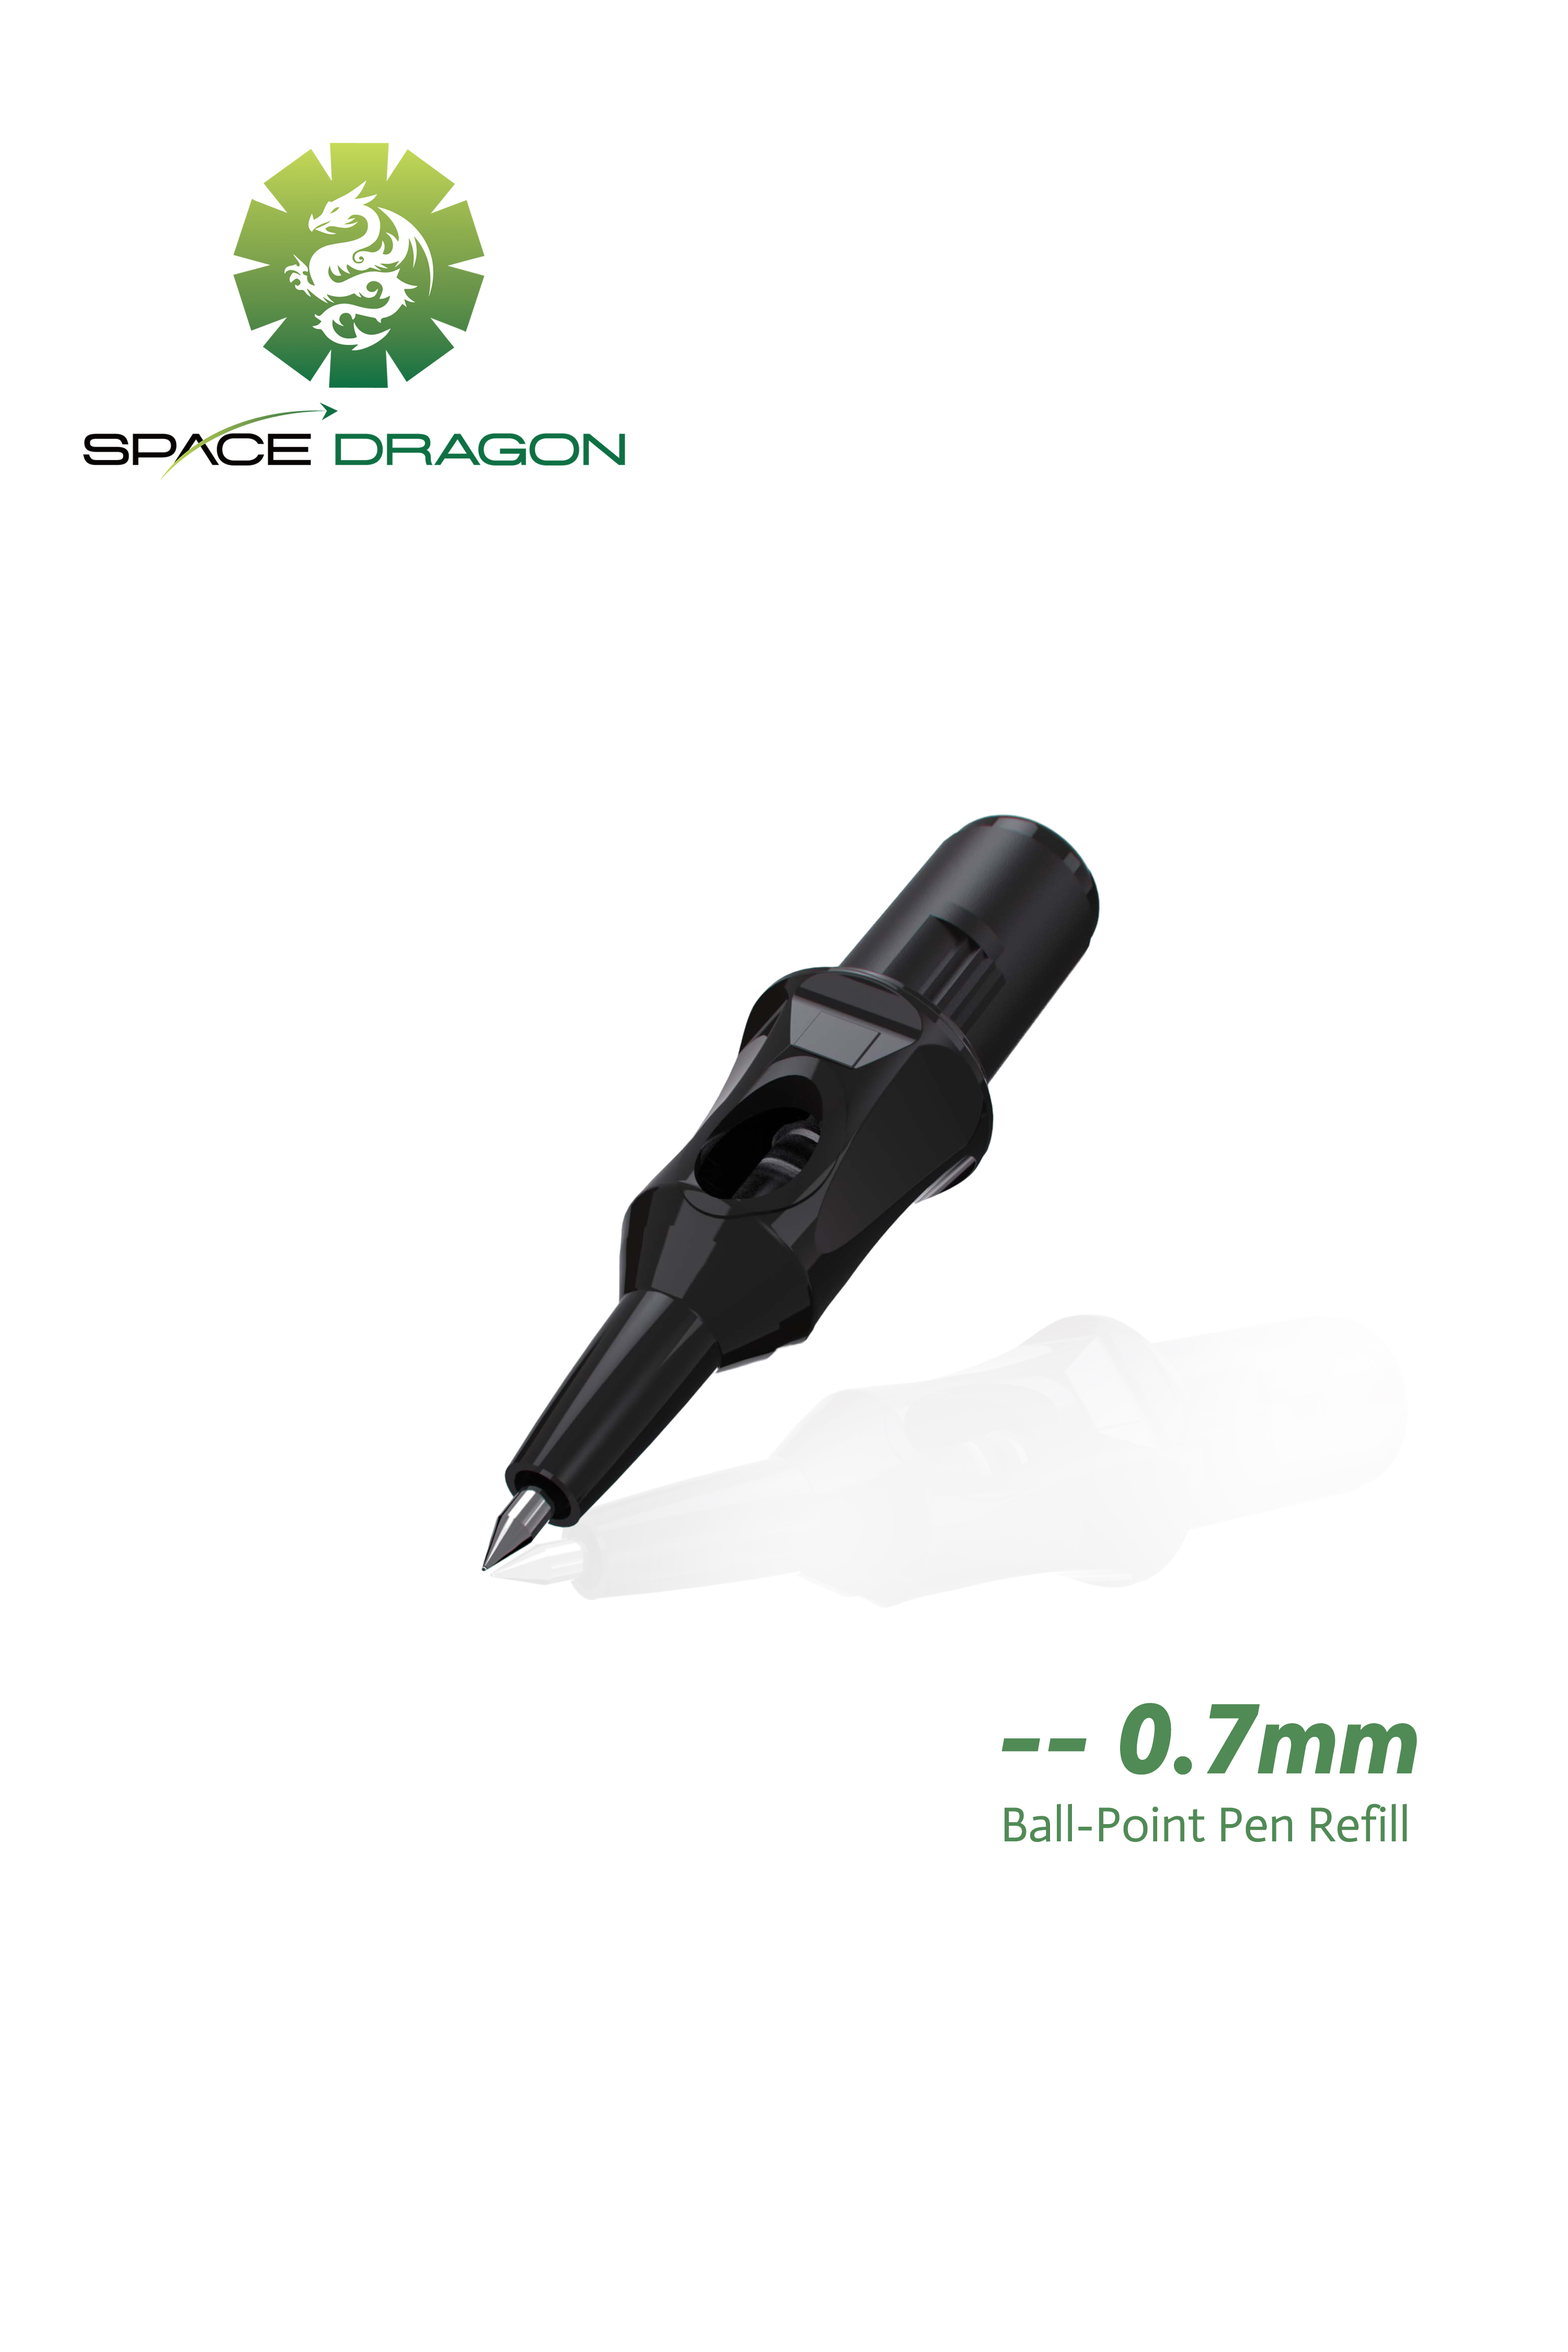 Spacedragon ballpoint pen tattoo cartridge 
